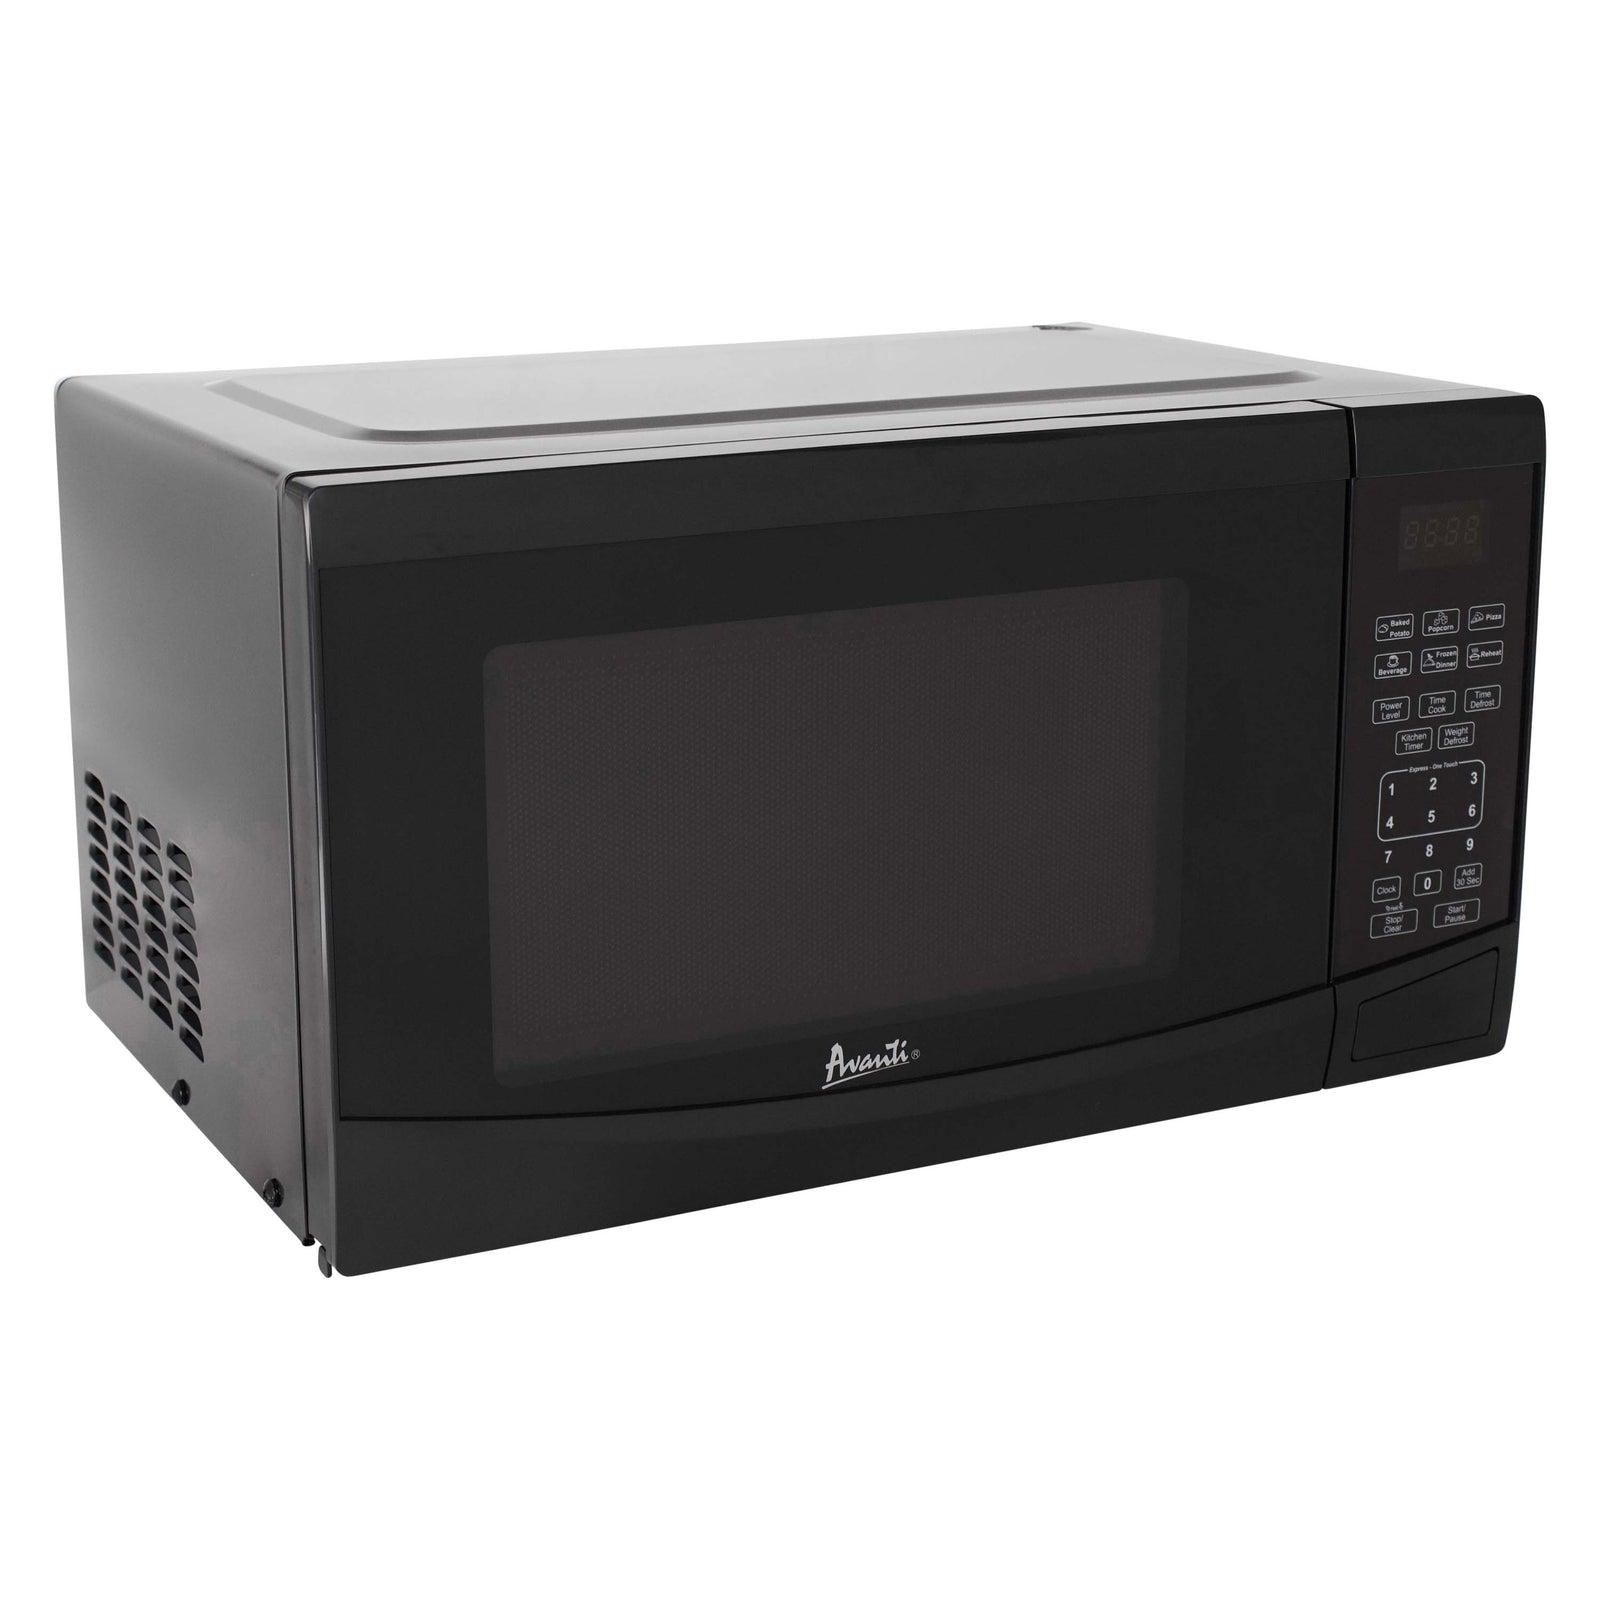 Avanti Countertop Microwave Oven, 0.9 cu. ft. - Stainless Steel / 0.9 cu. ft.